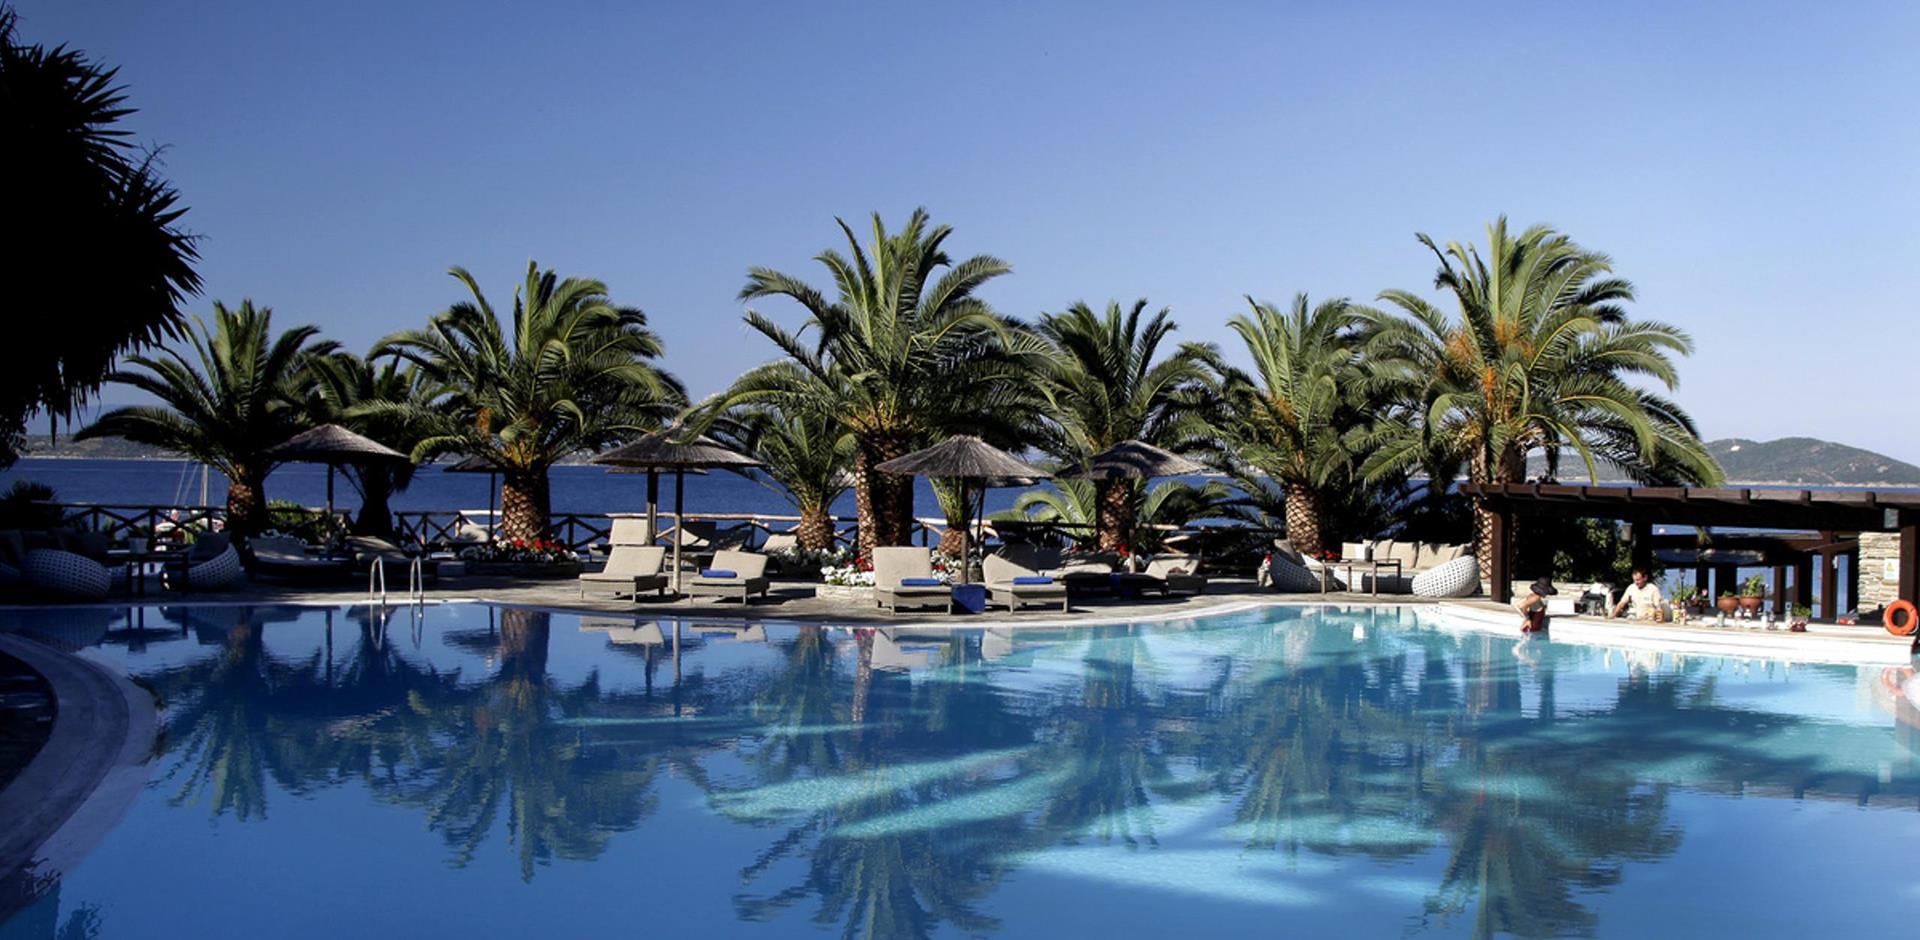 Eagles Palace Hotel & Spa, Accommodation, Greece, A&K